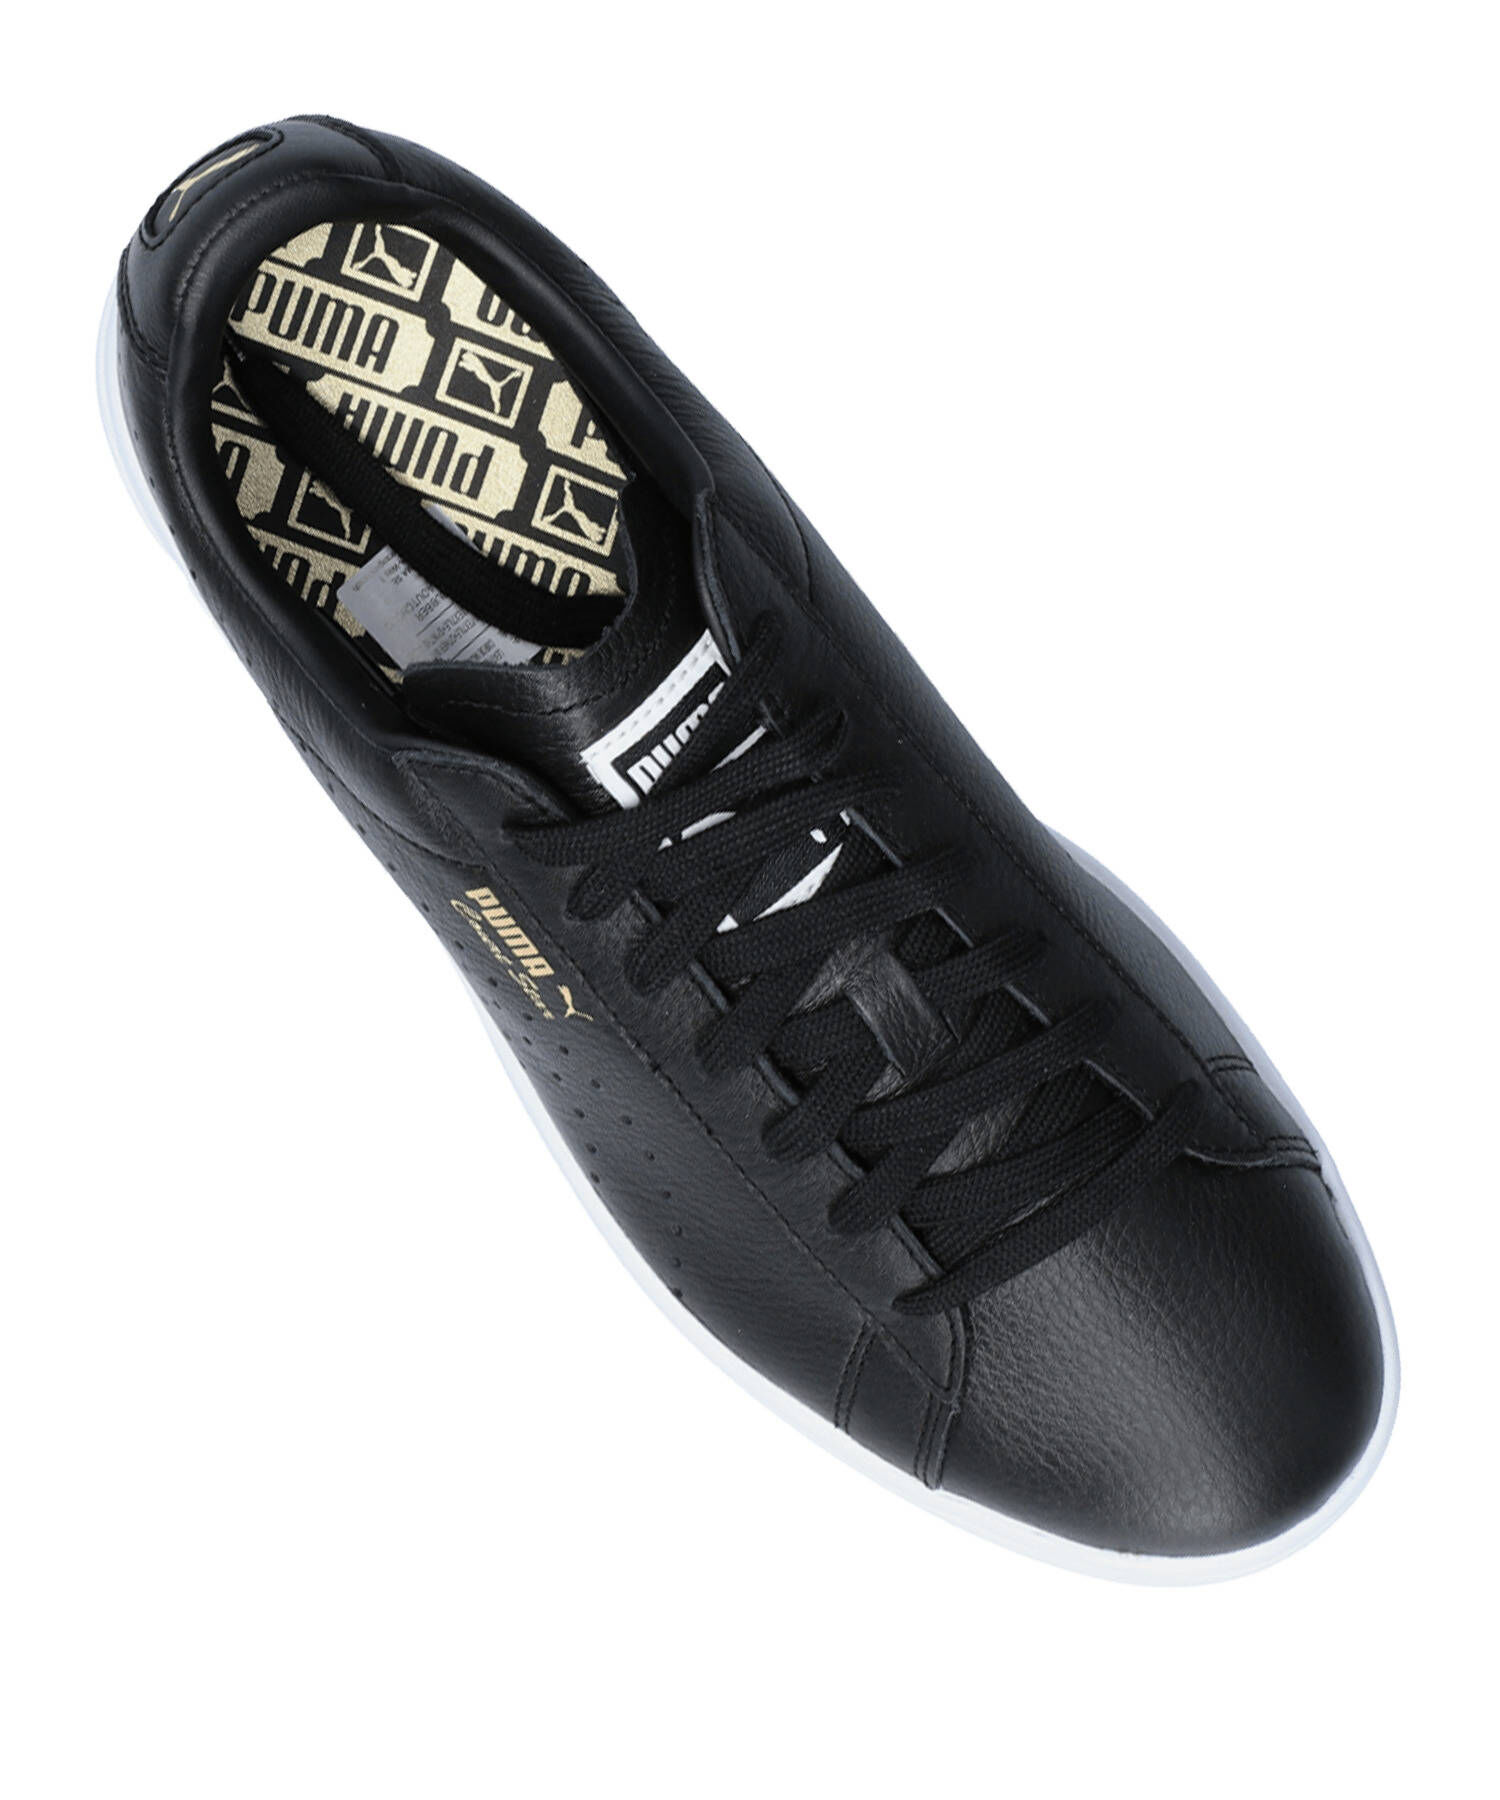 Puma Herren Lifestyle - Schuhe Herren - Sneakers Court Star NM Sneaker  kaufen | engelhorn